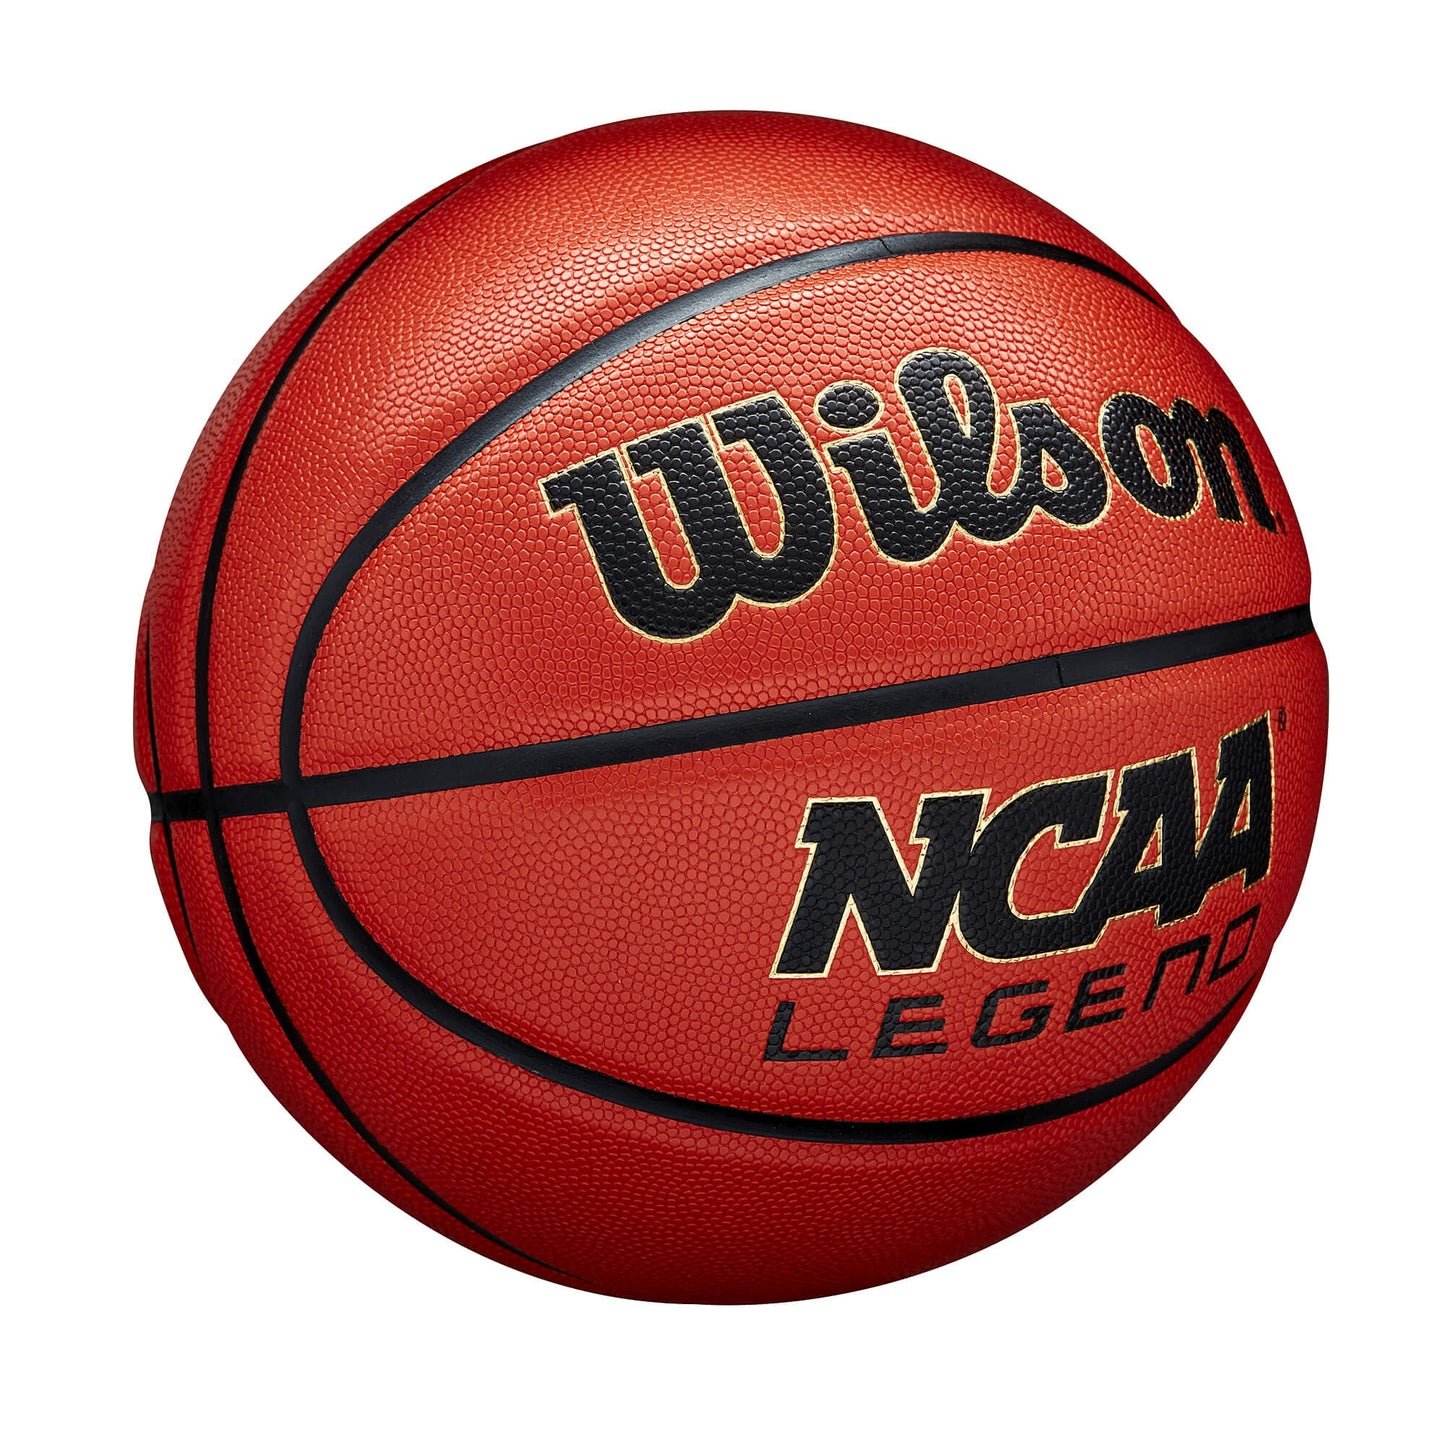 Wilson NCAA LEGEND BSKT Orange/Black (sz. 7)